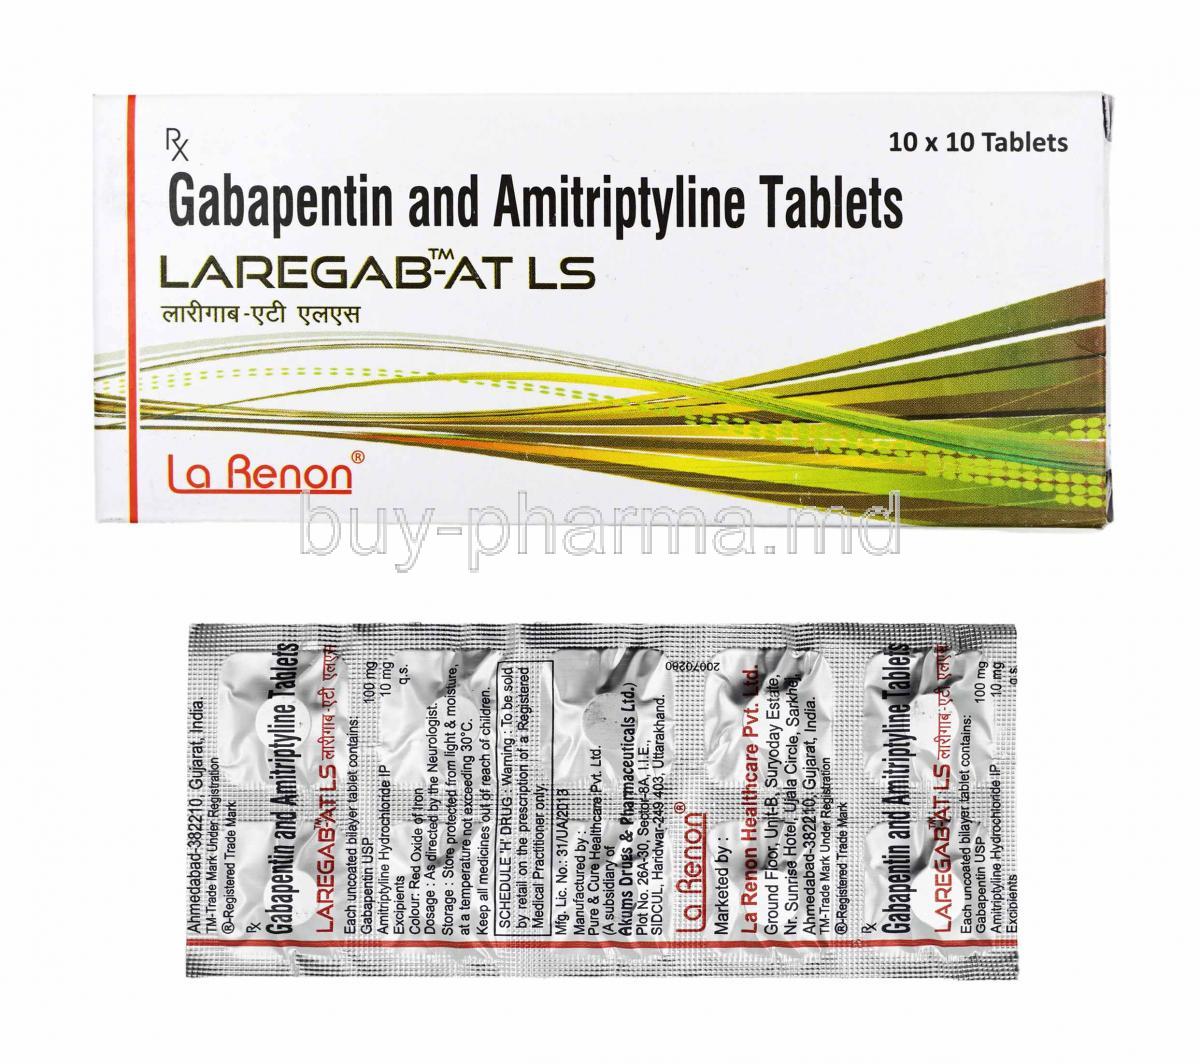 Laregab AT LS, Gabapentin and Amitriptyline box and tablets